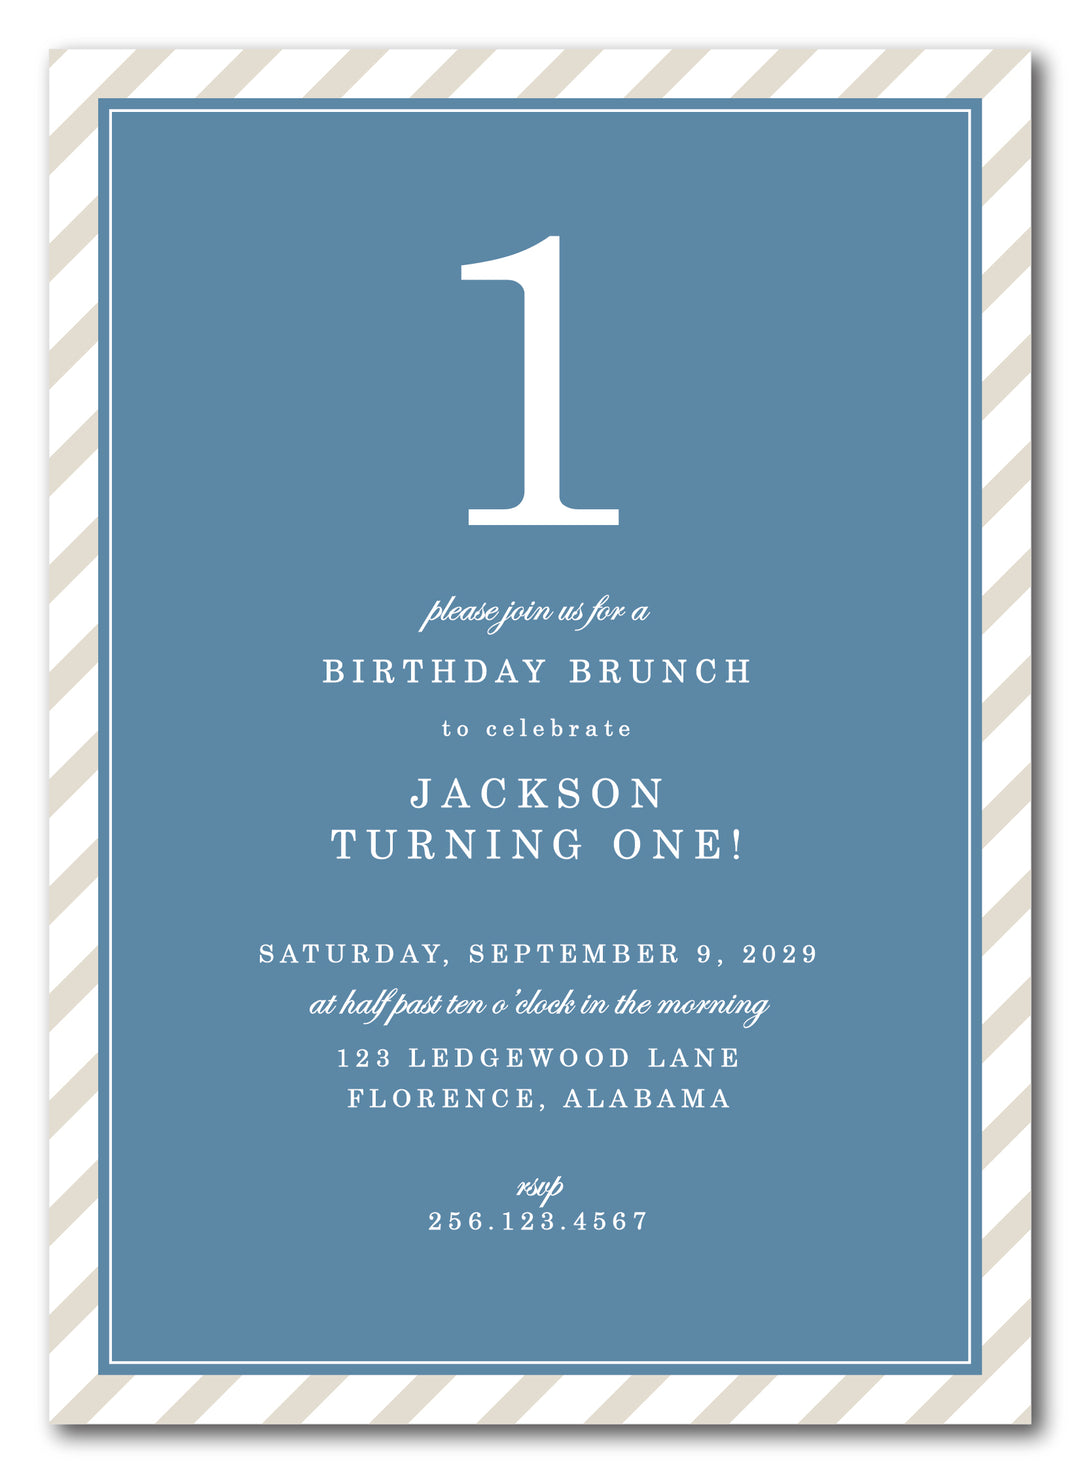 The Birthday Brunch II Birthday Party Invitation